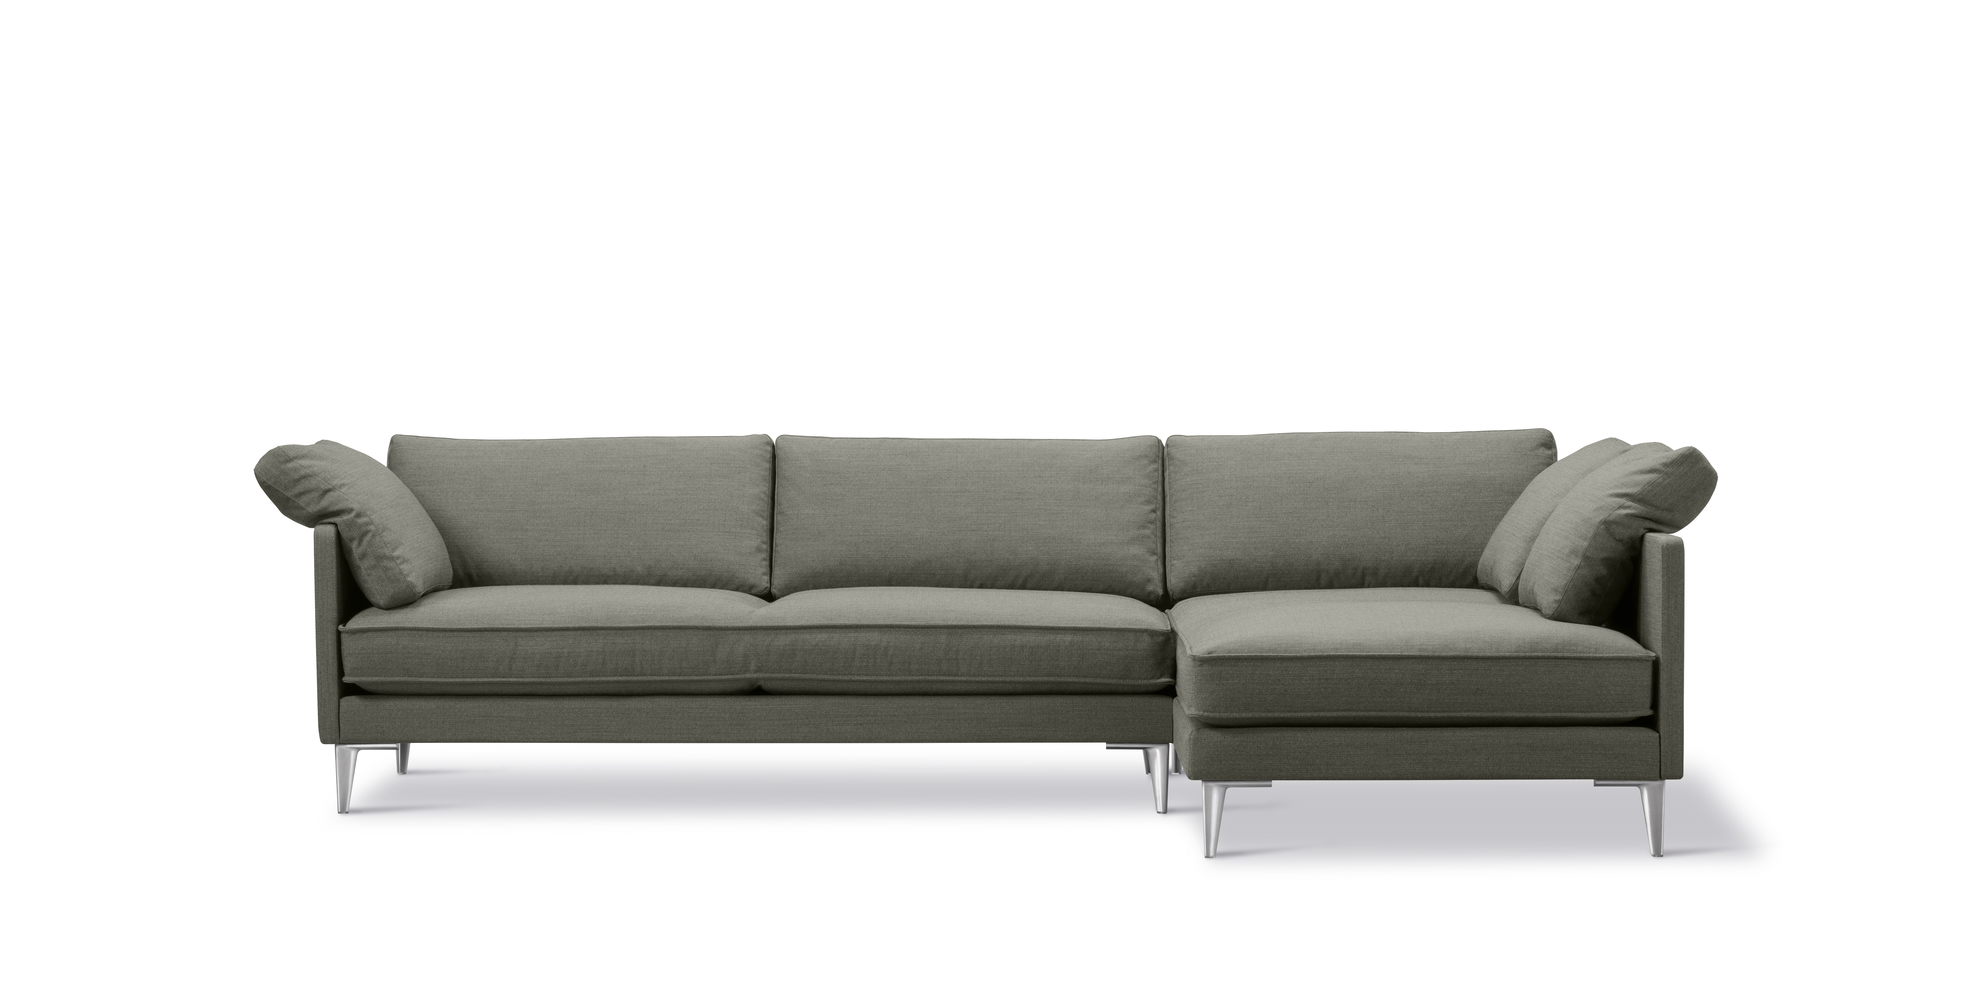 Sofa - Foss FRAGT • Køb online • Prisgaranti